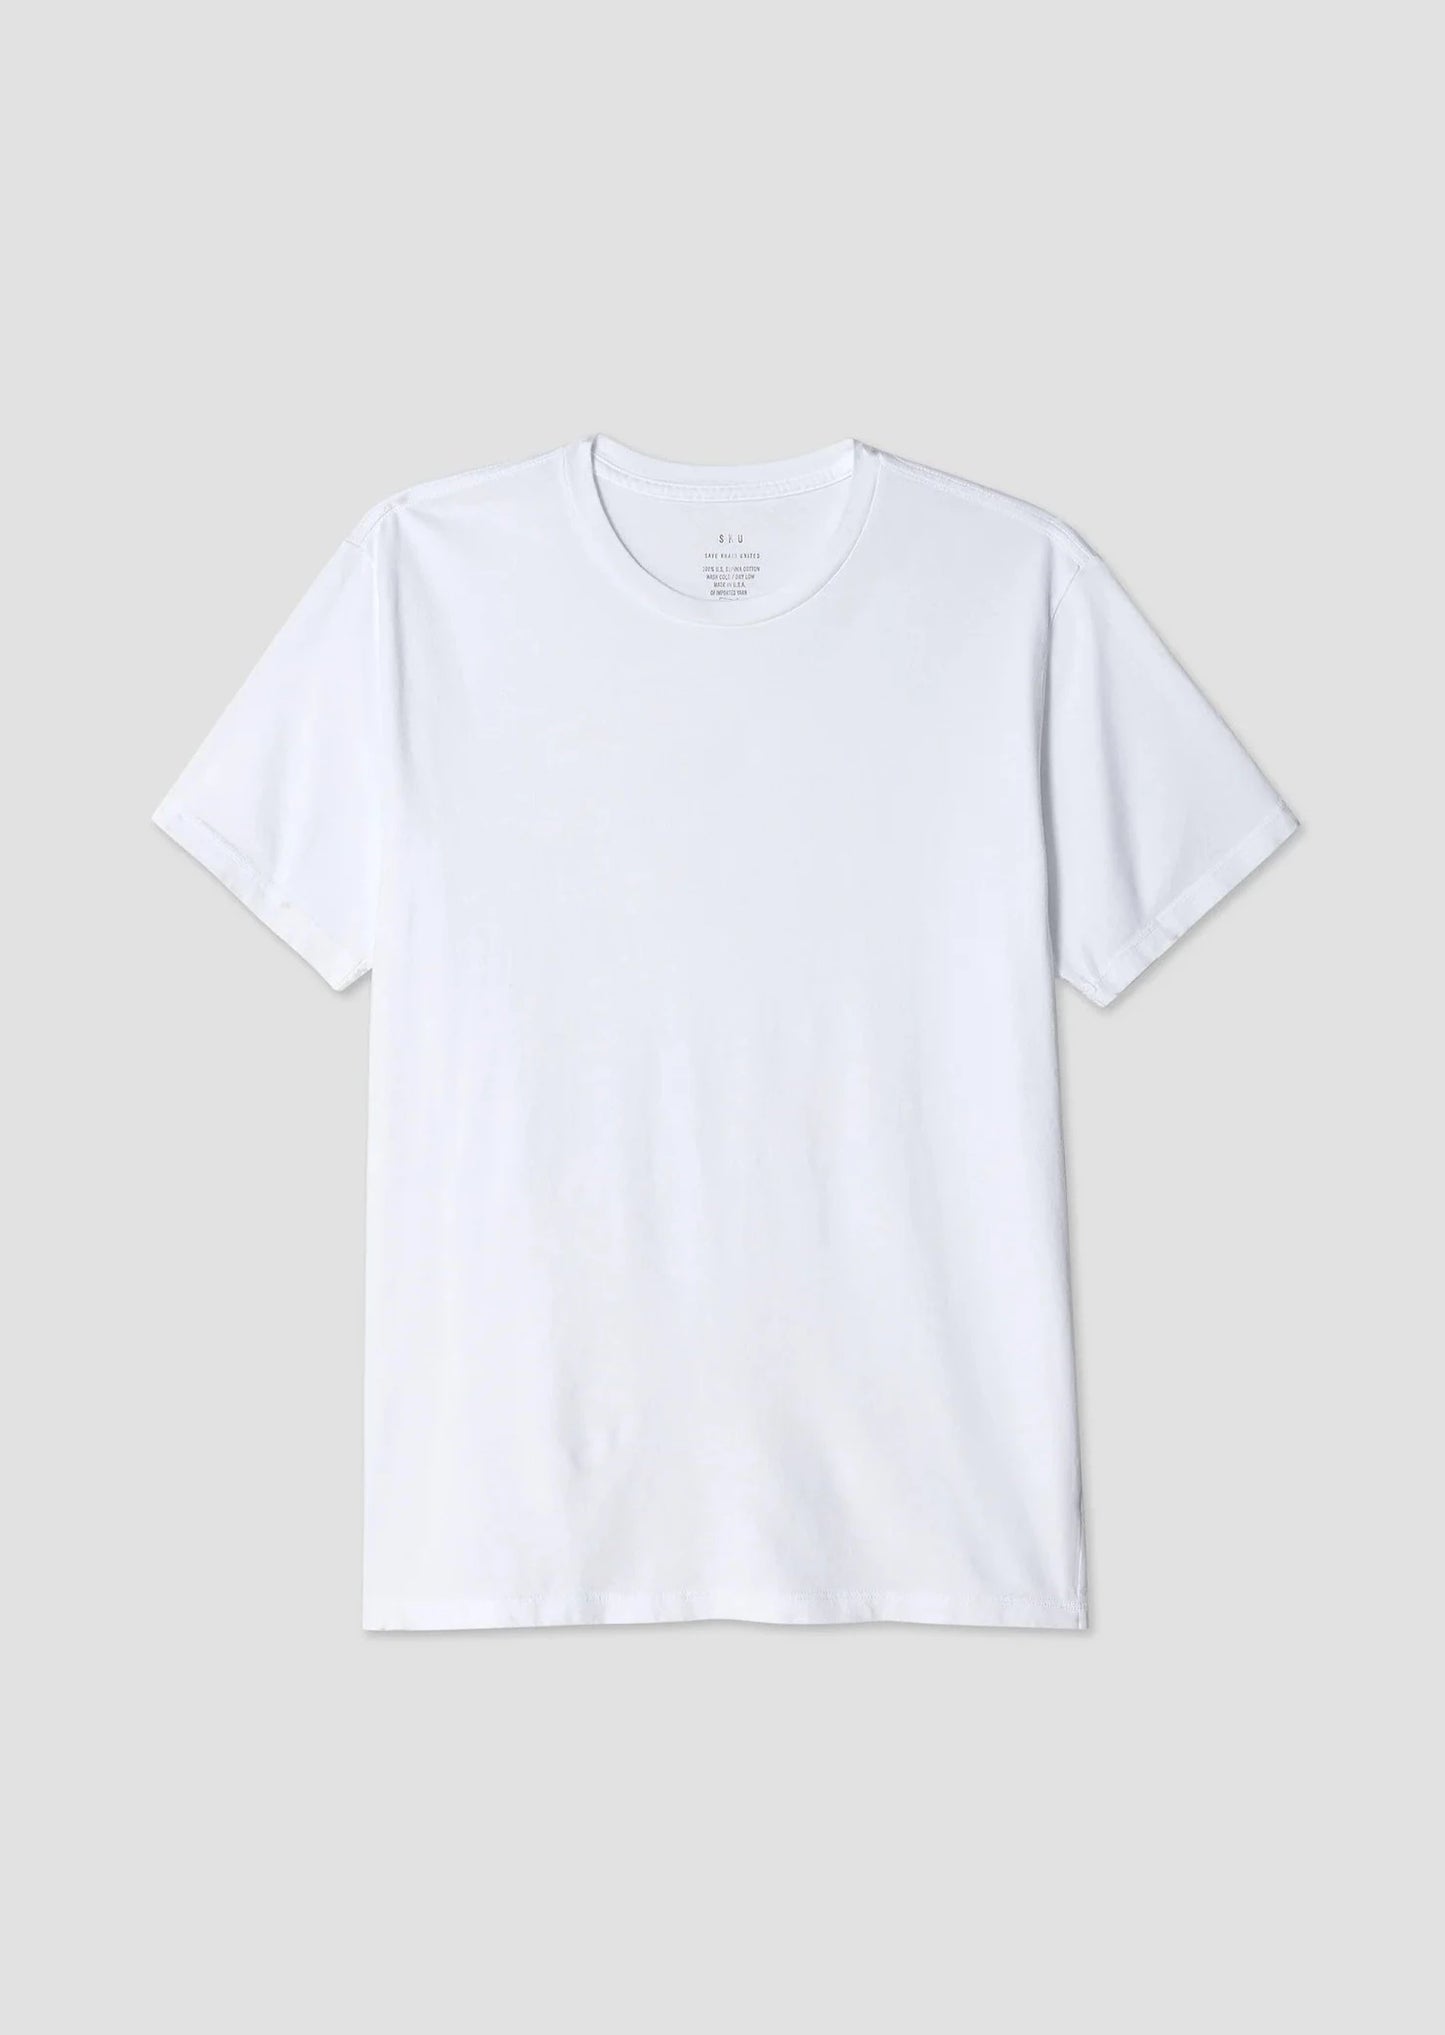 S/S Supima Cotton Jersey Crew Tee T Shirt Save Khaki United White S 